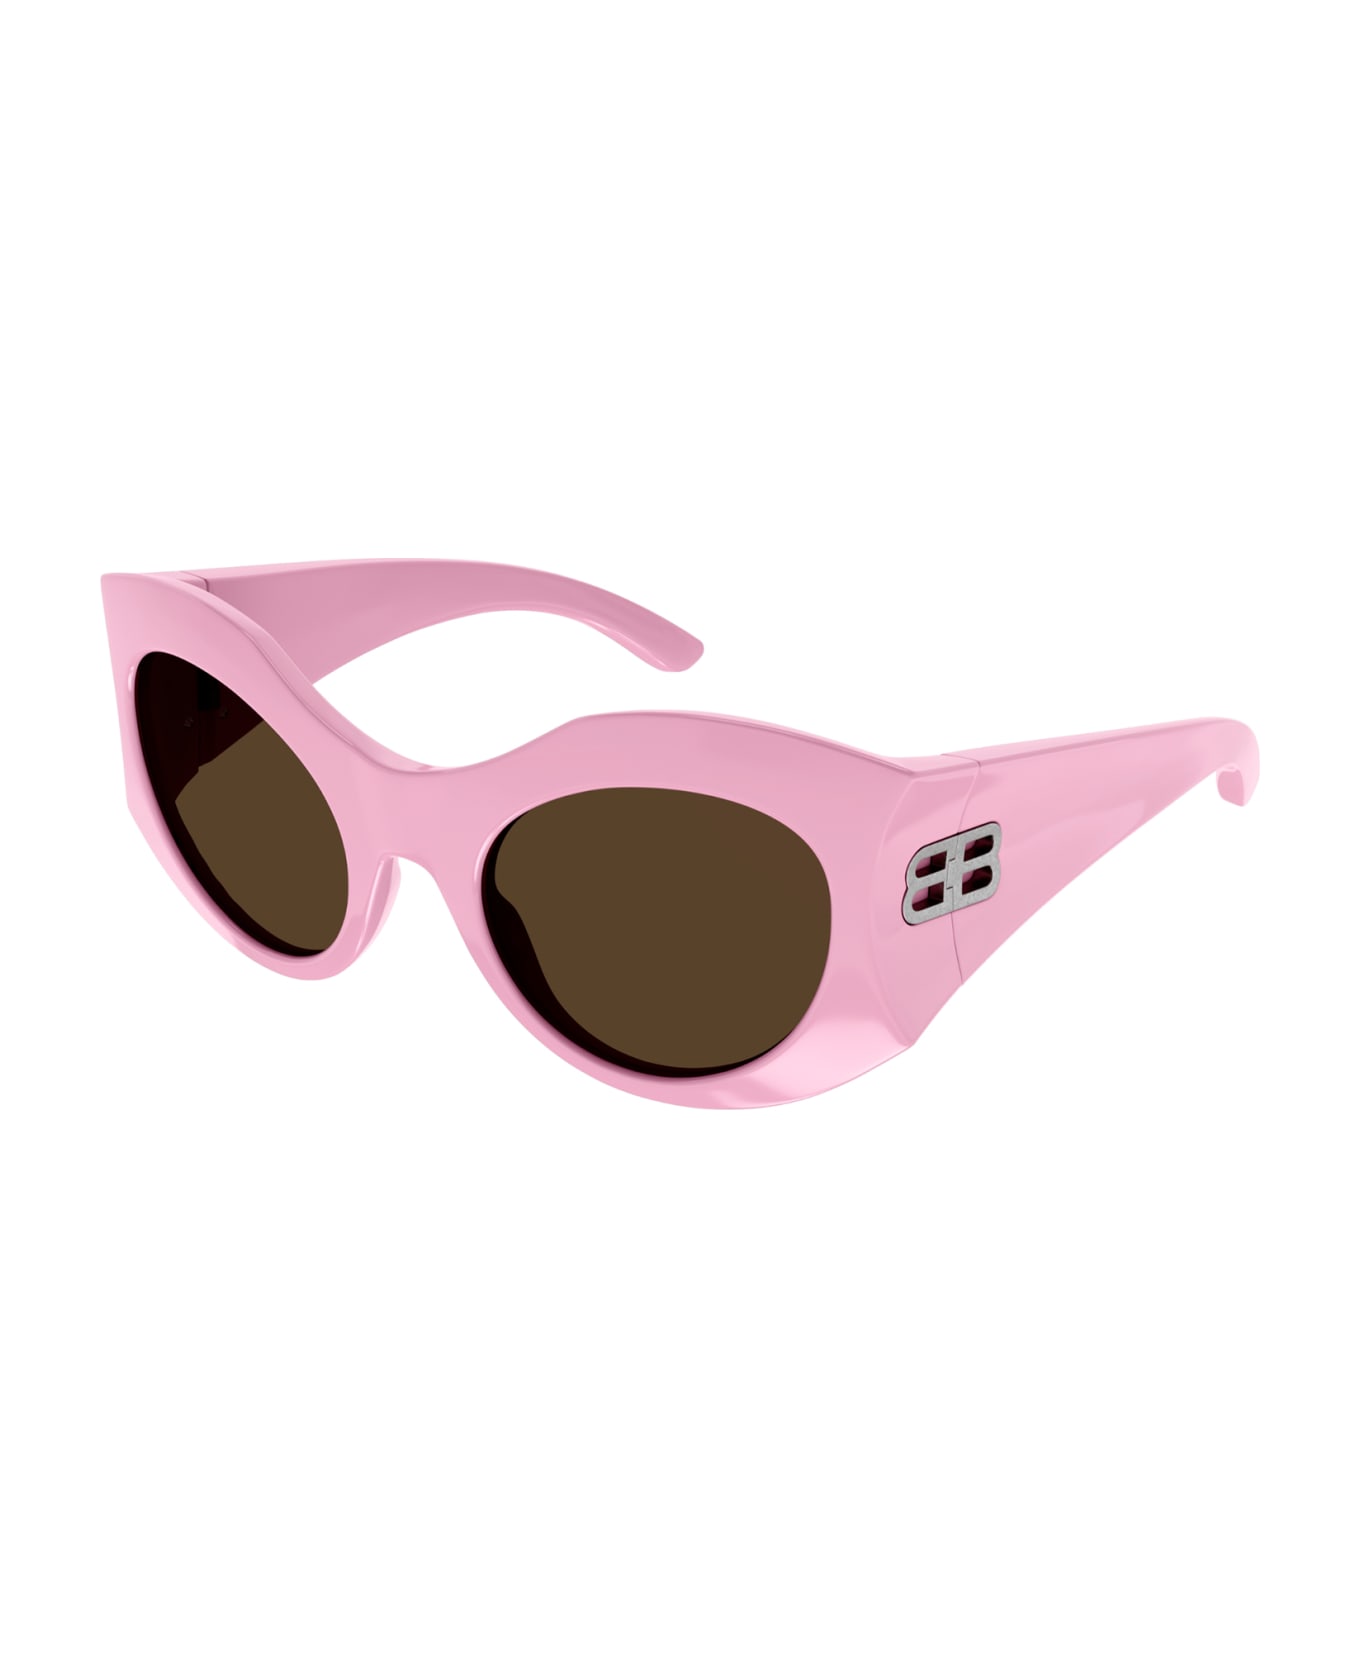 Balenciaga Eyewear 1fav4li0a - Seacliff 831-17 sunglasses